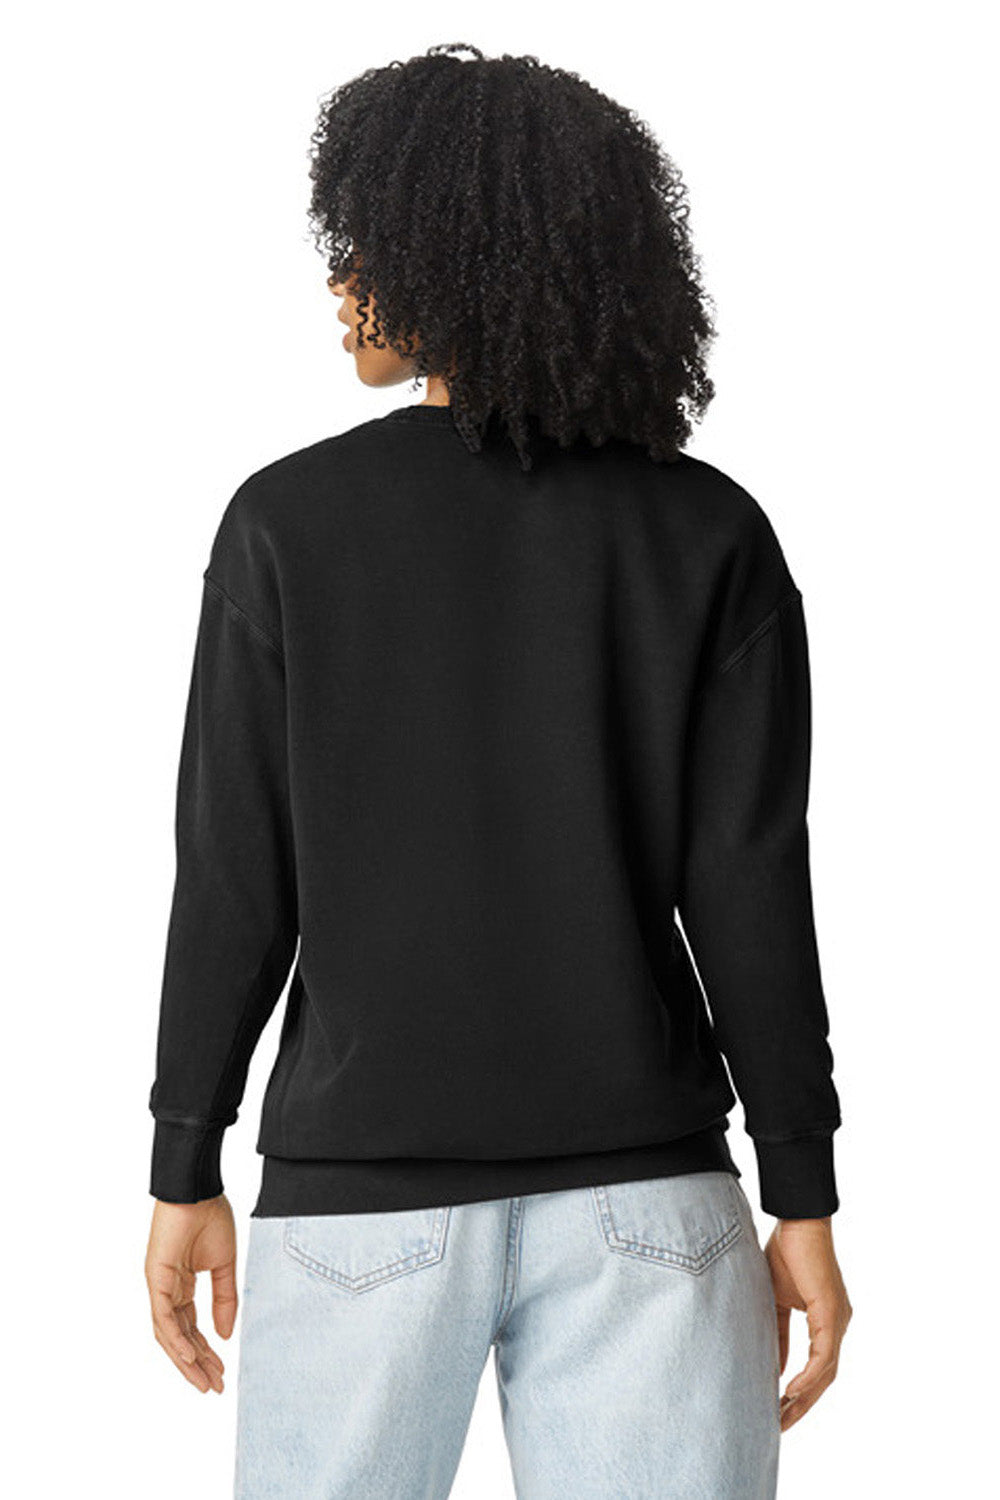 Comfort Colors 1466 Mens Garment Dyed Fleece Crewneck Sweatshirt Black Model Back